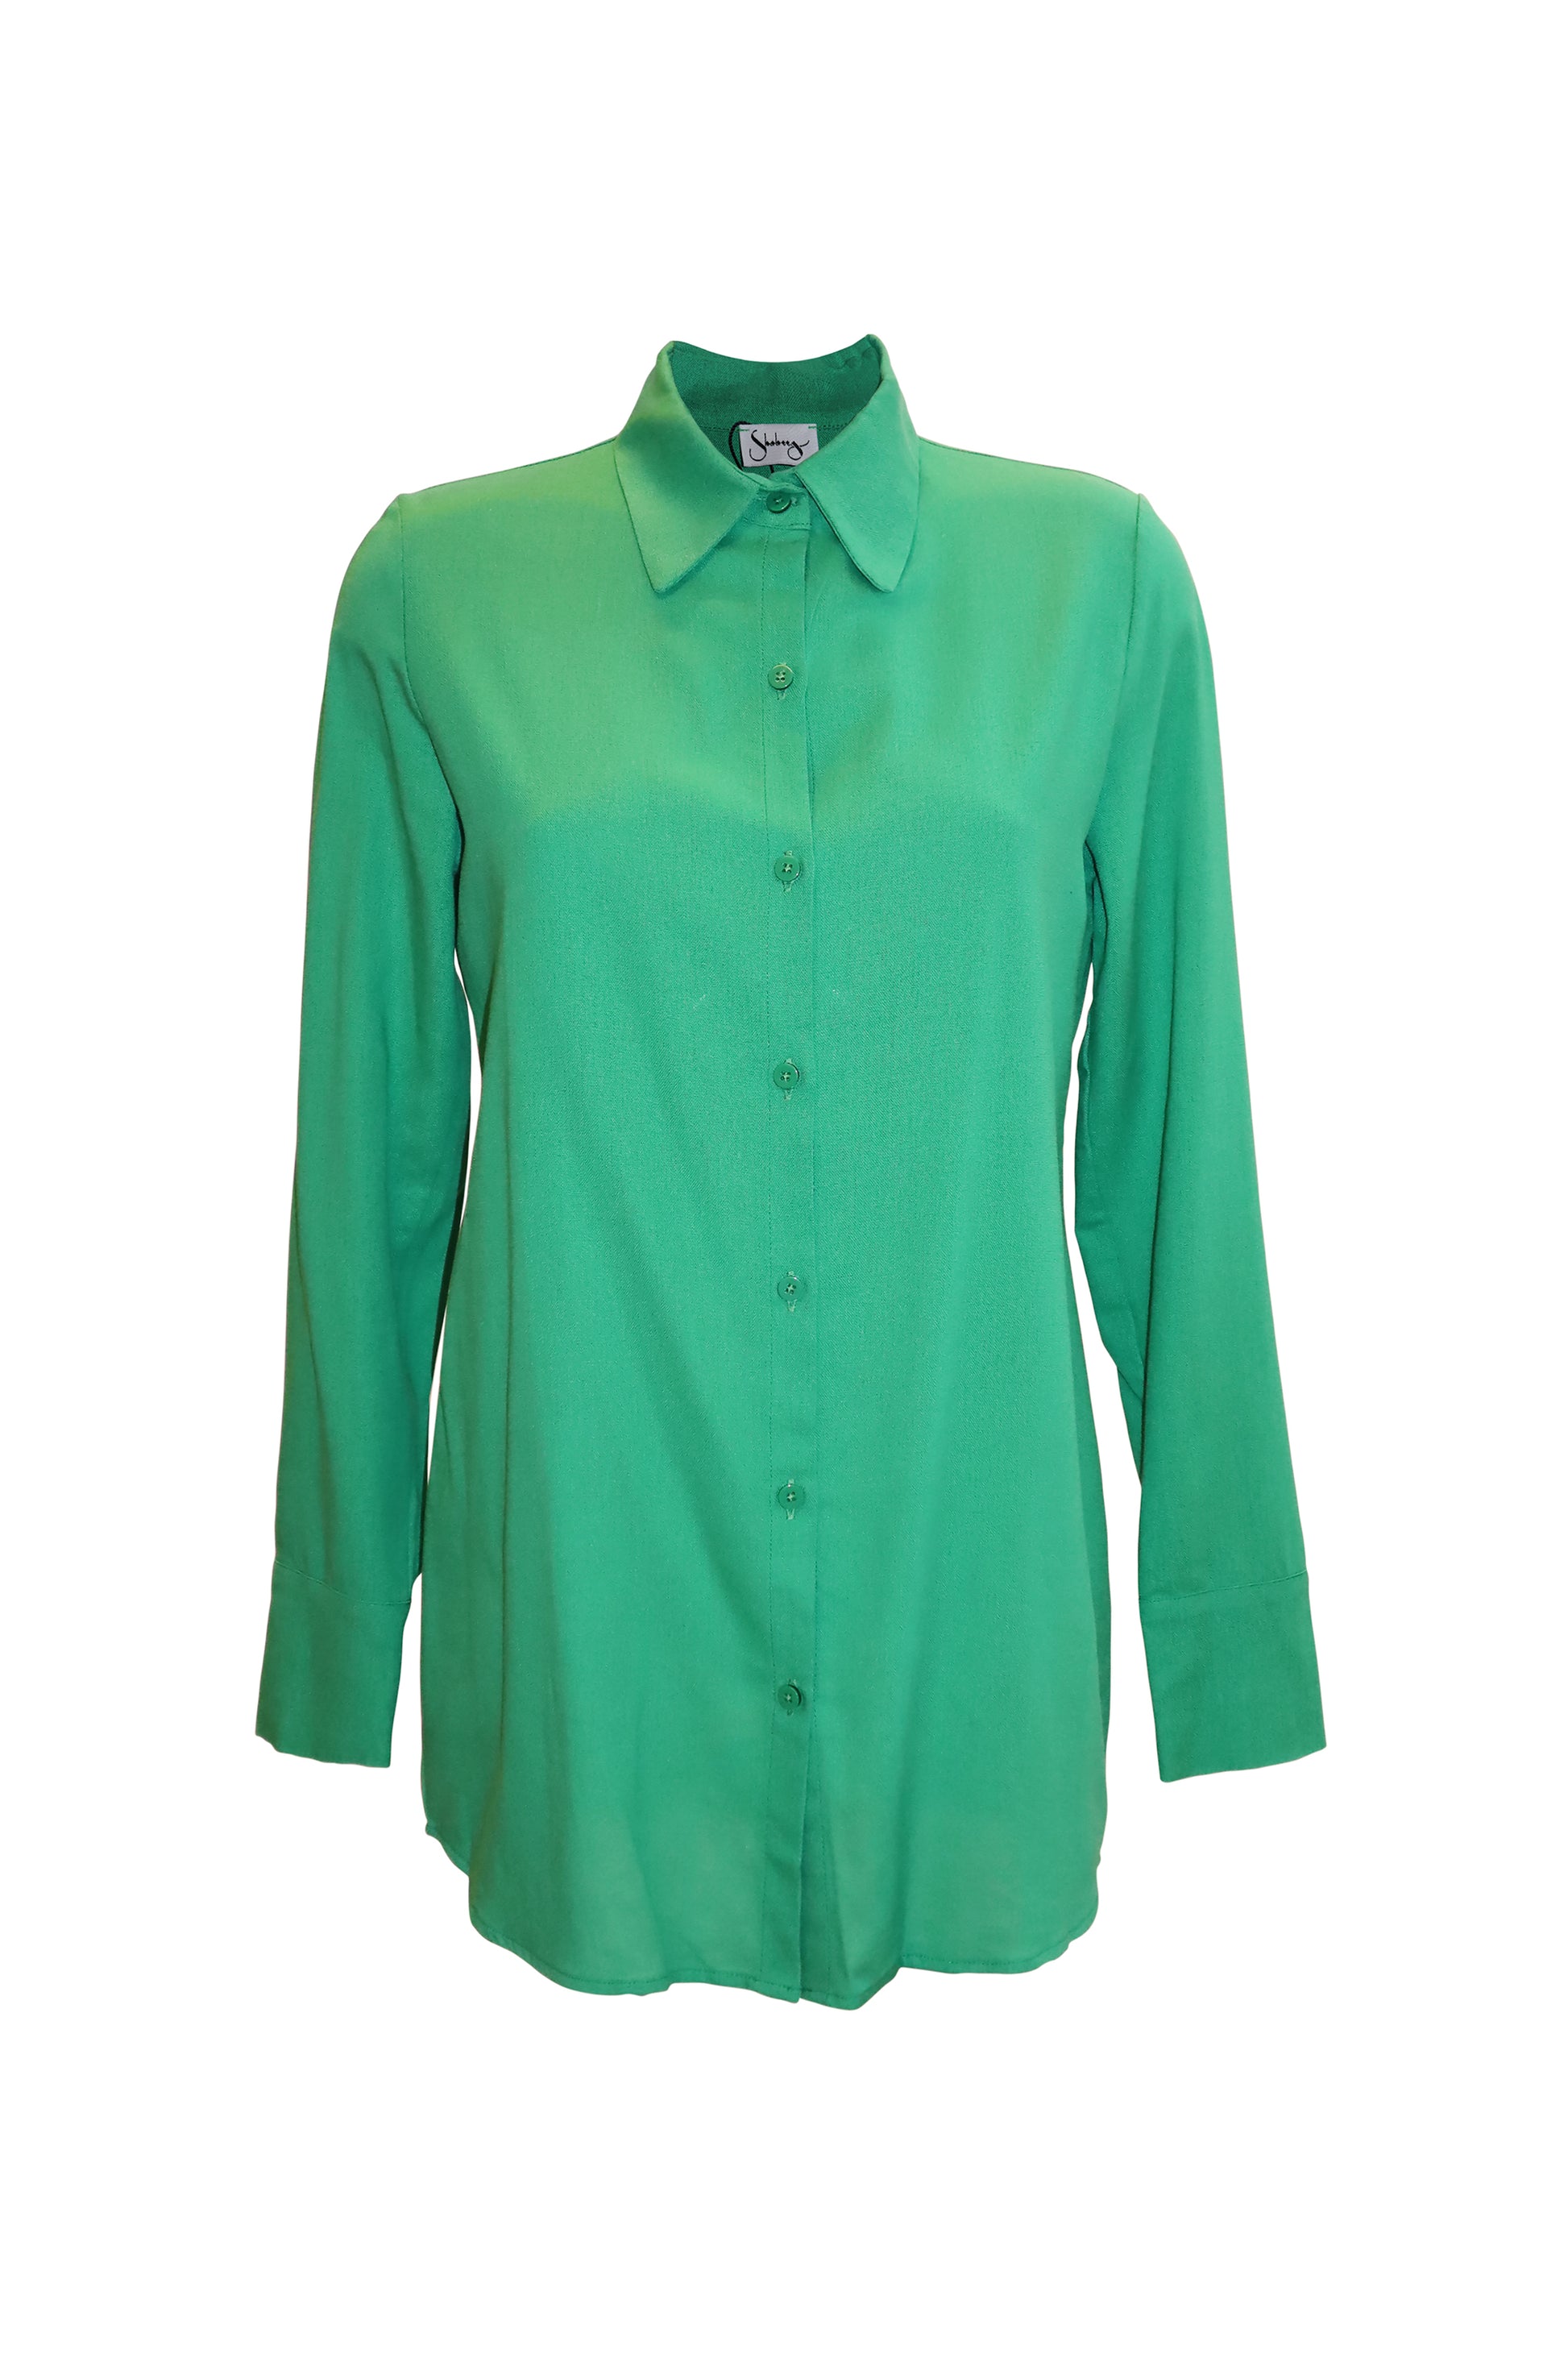 Cotton Green Shirt by Shabeeg